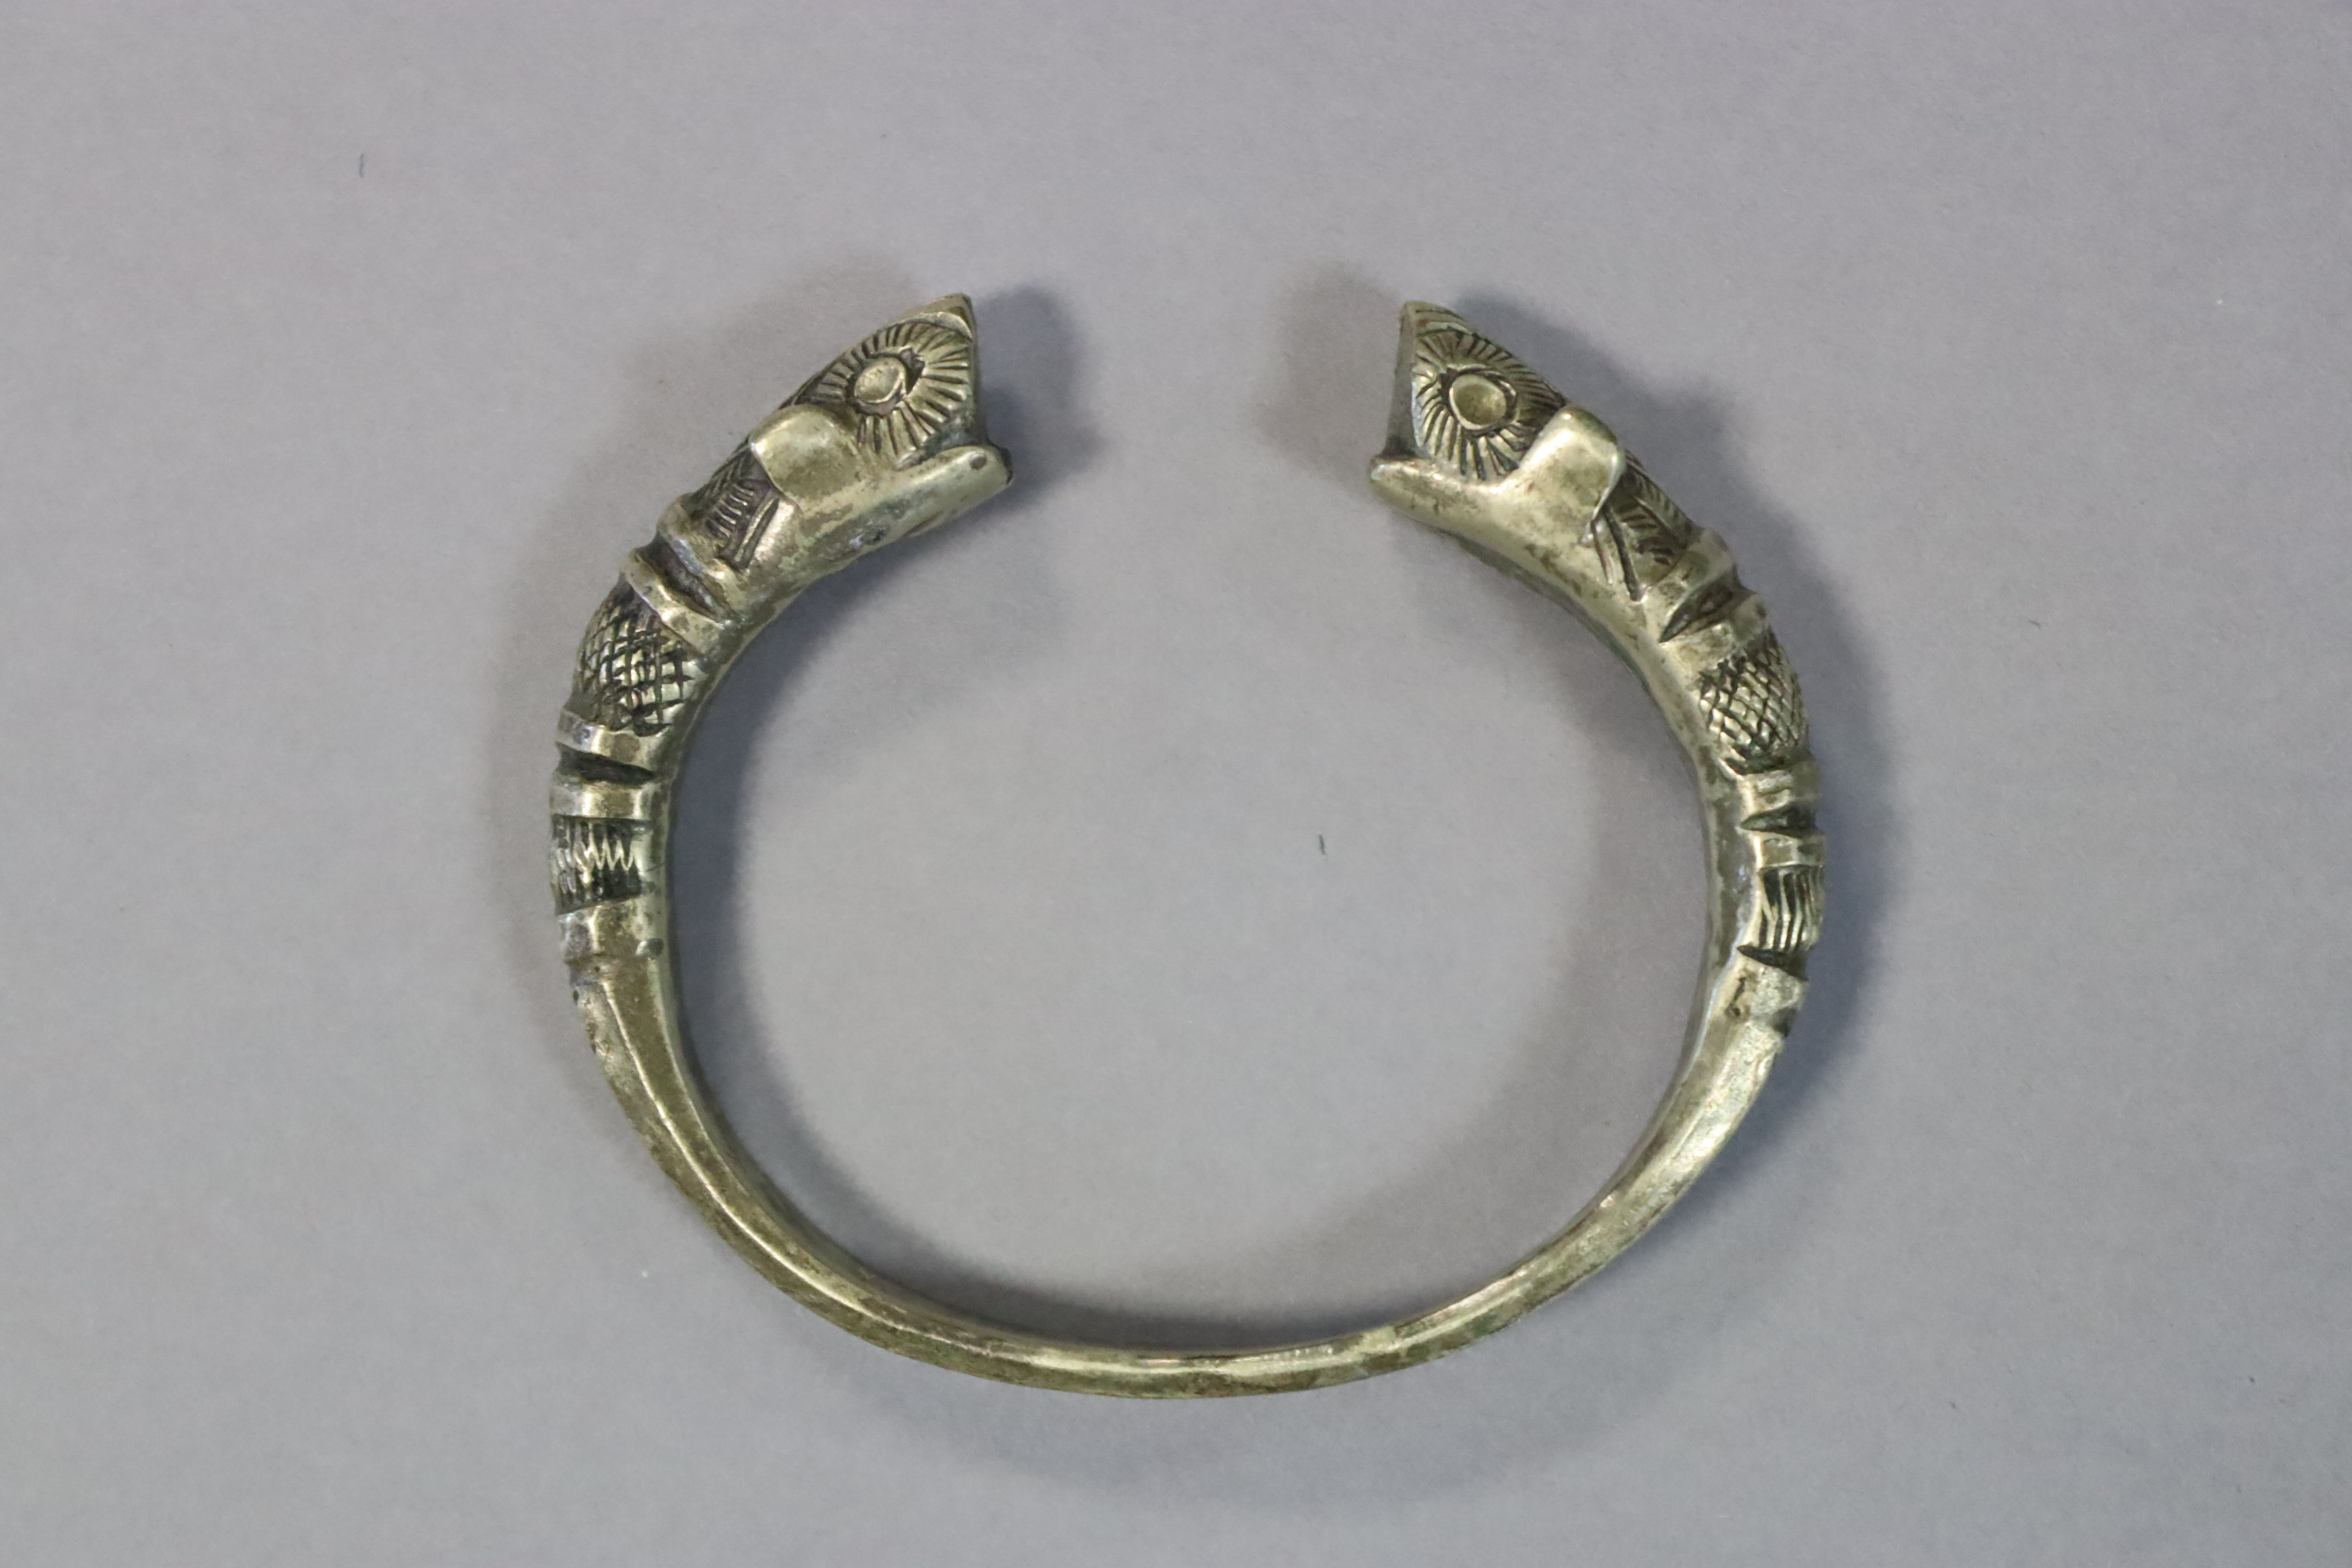 A Masonic regalia pendant; a silvered-metal slave’s bracelet; & an arts & crafts – style copper & - Image 2 of 8